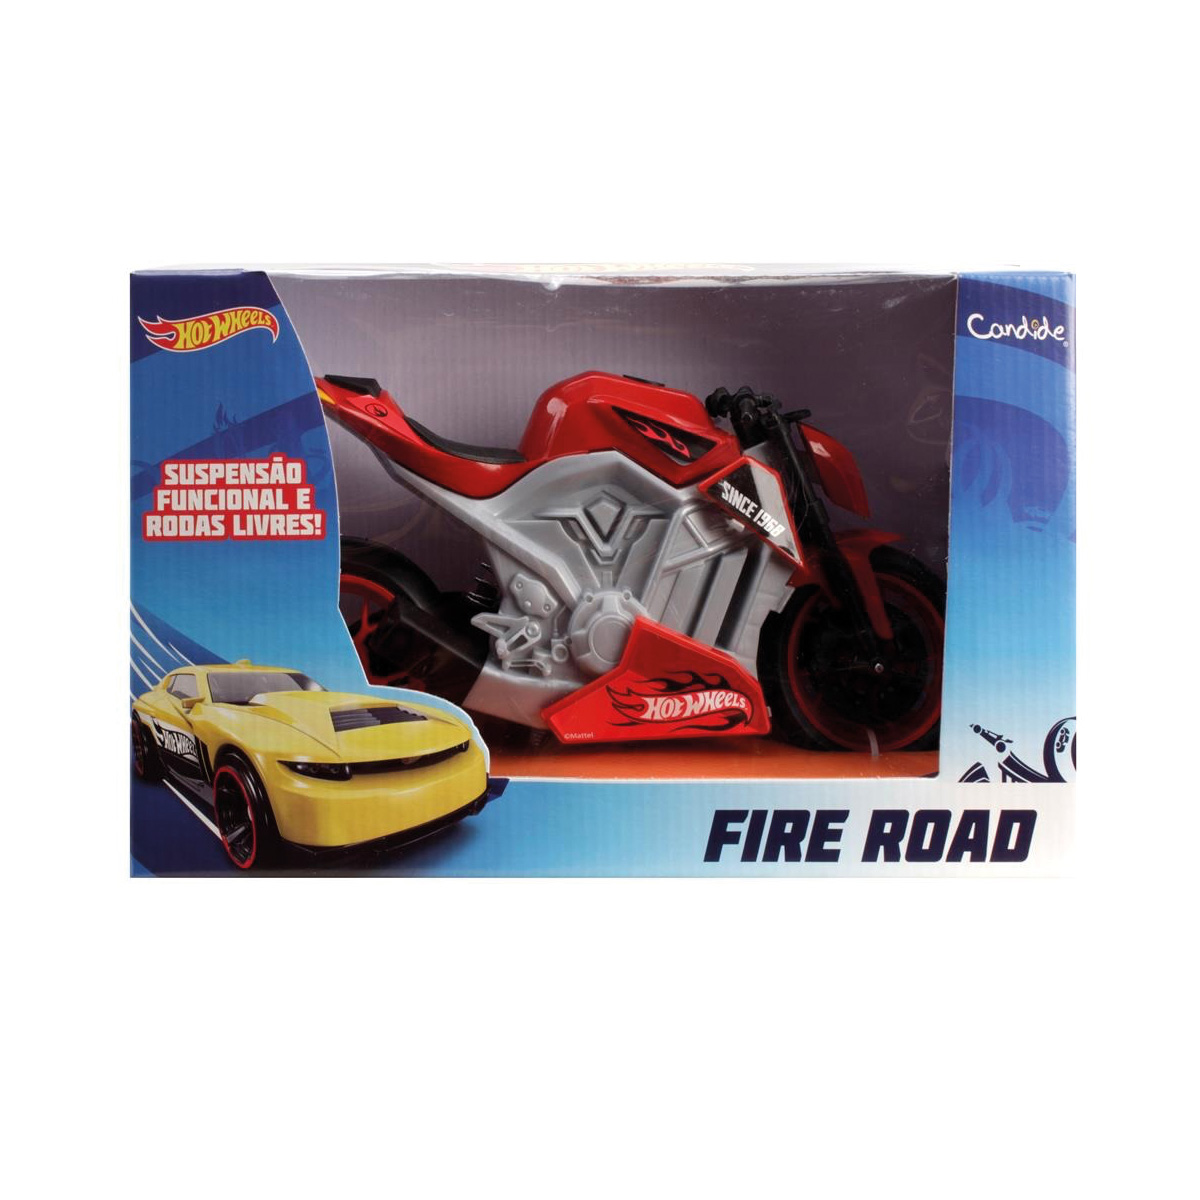 7897500545499 - MOTO FIRE ROAD HOT WHEELS RODA LIVRE REF 4549 CANDIDE